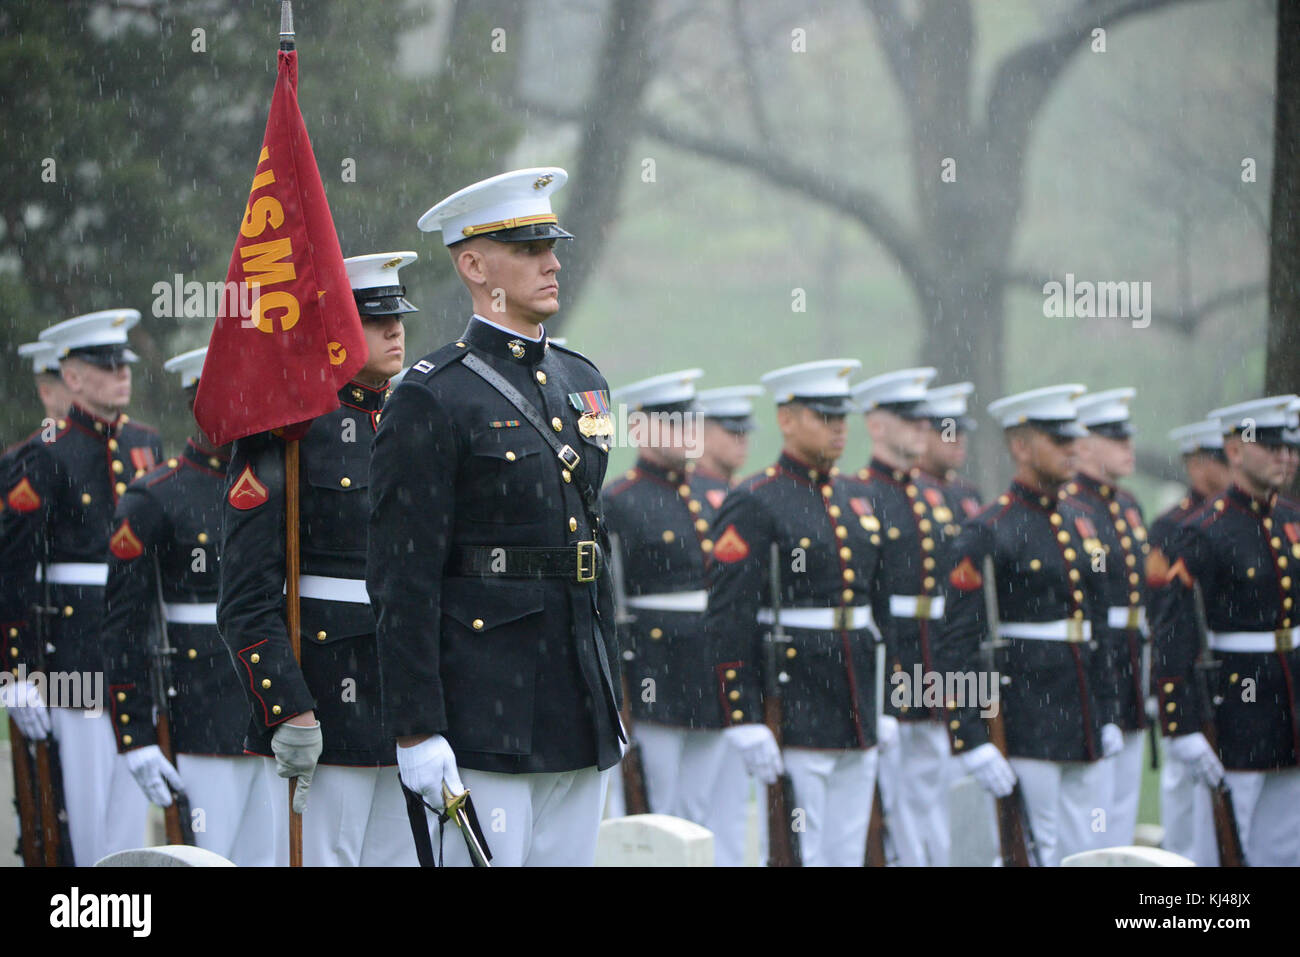 The graveside service for John Glenn takes place in Arlington National Cemetery (33877698955) Stock Photo